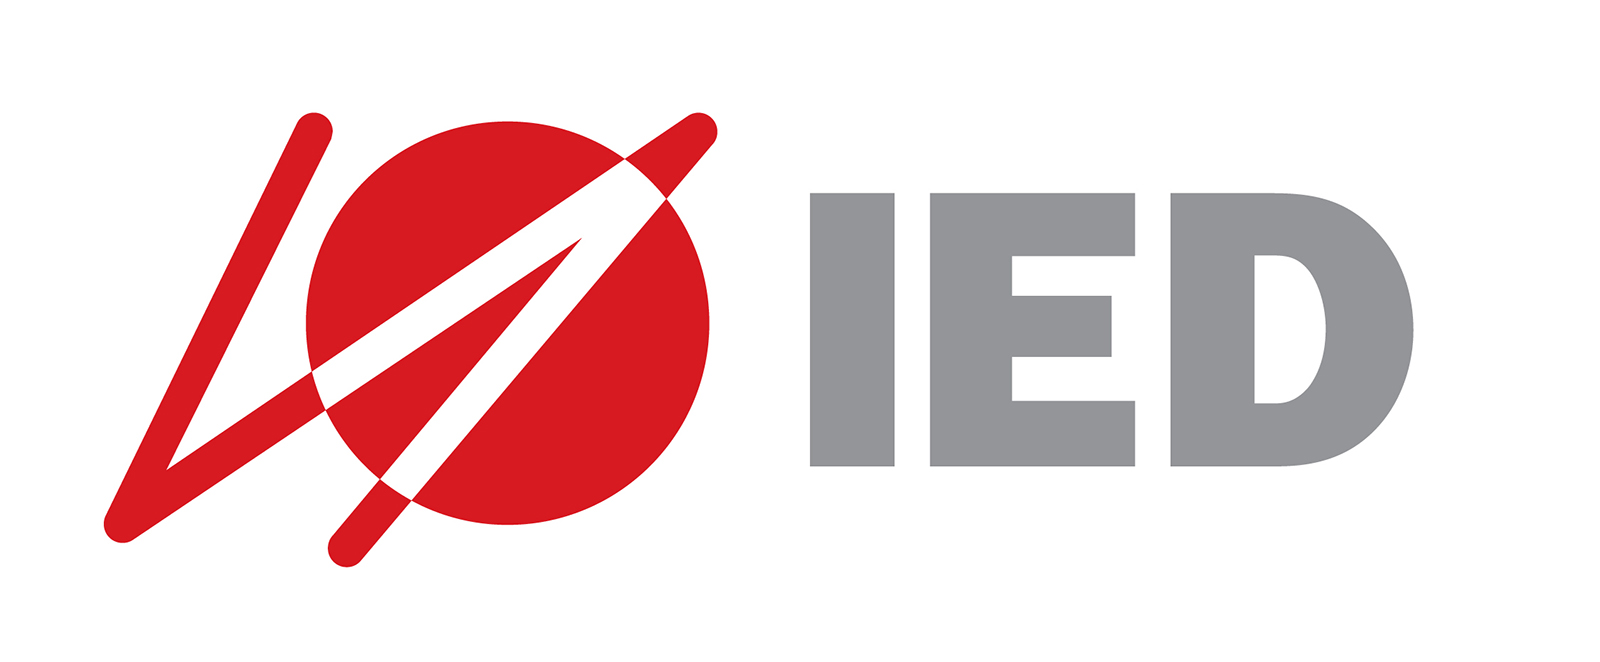 Ied- Istituto Europeo di Design